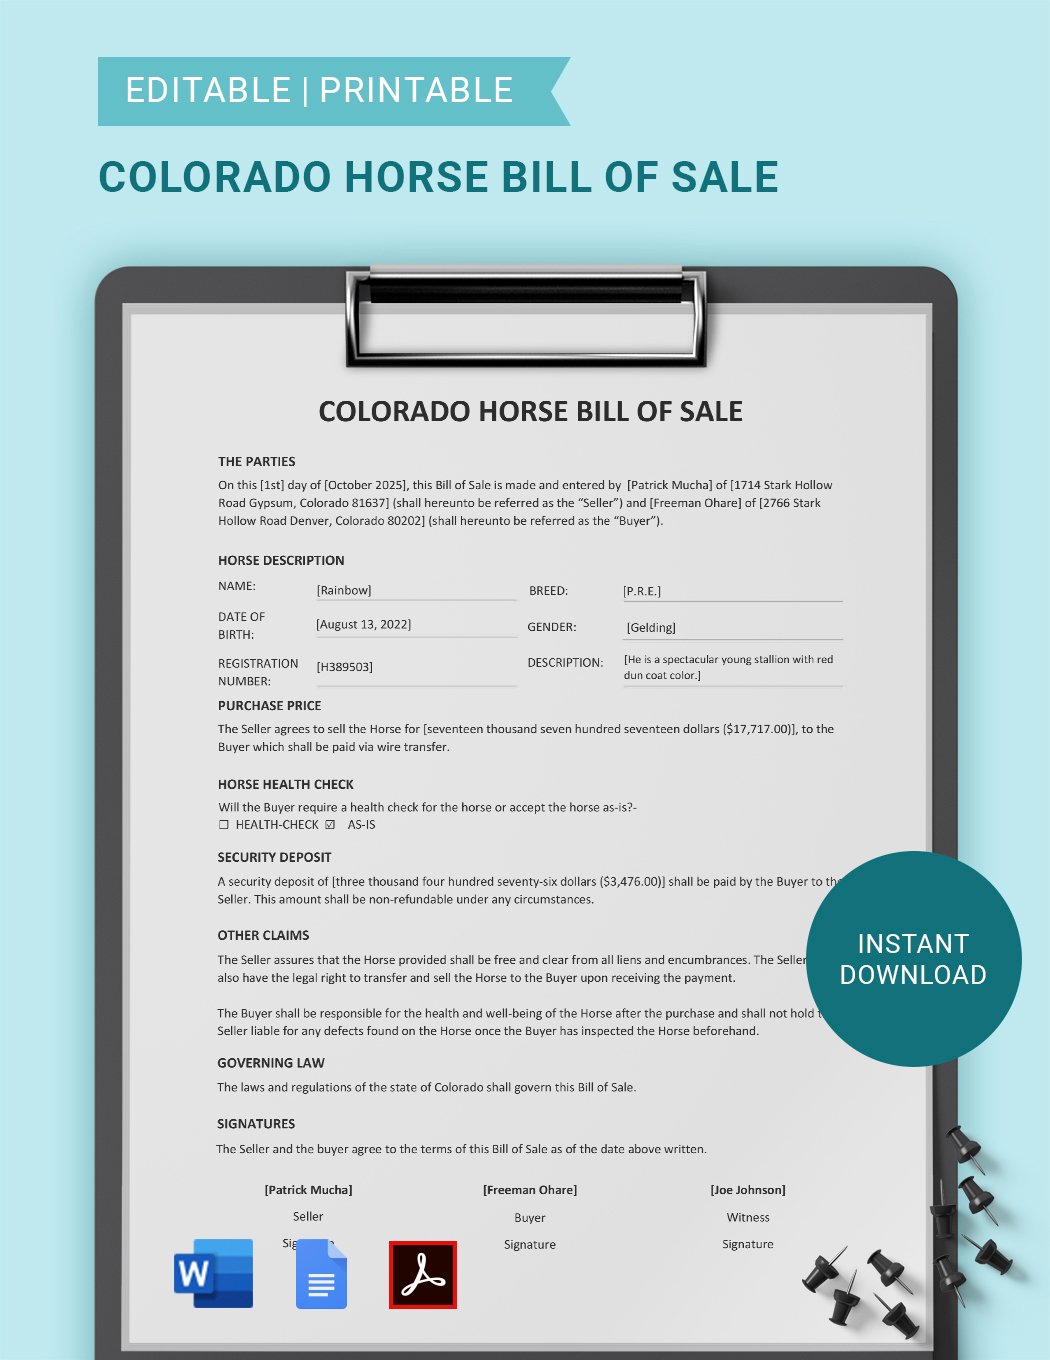 Colorado Horse Bill of Sale Template in Word, Google Docs, PDF